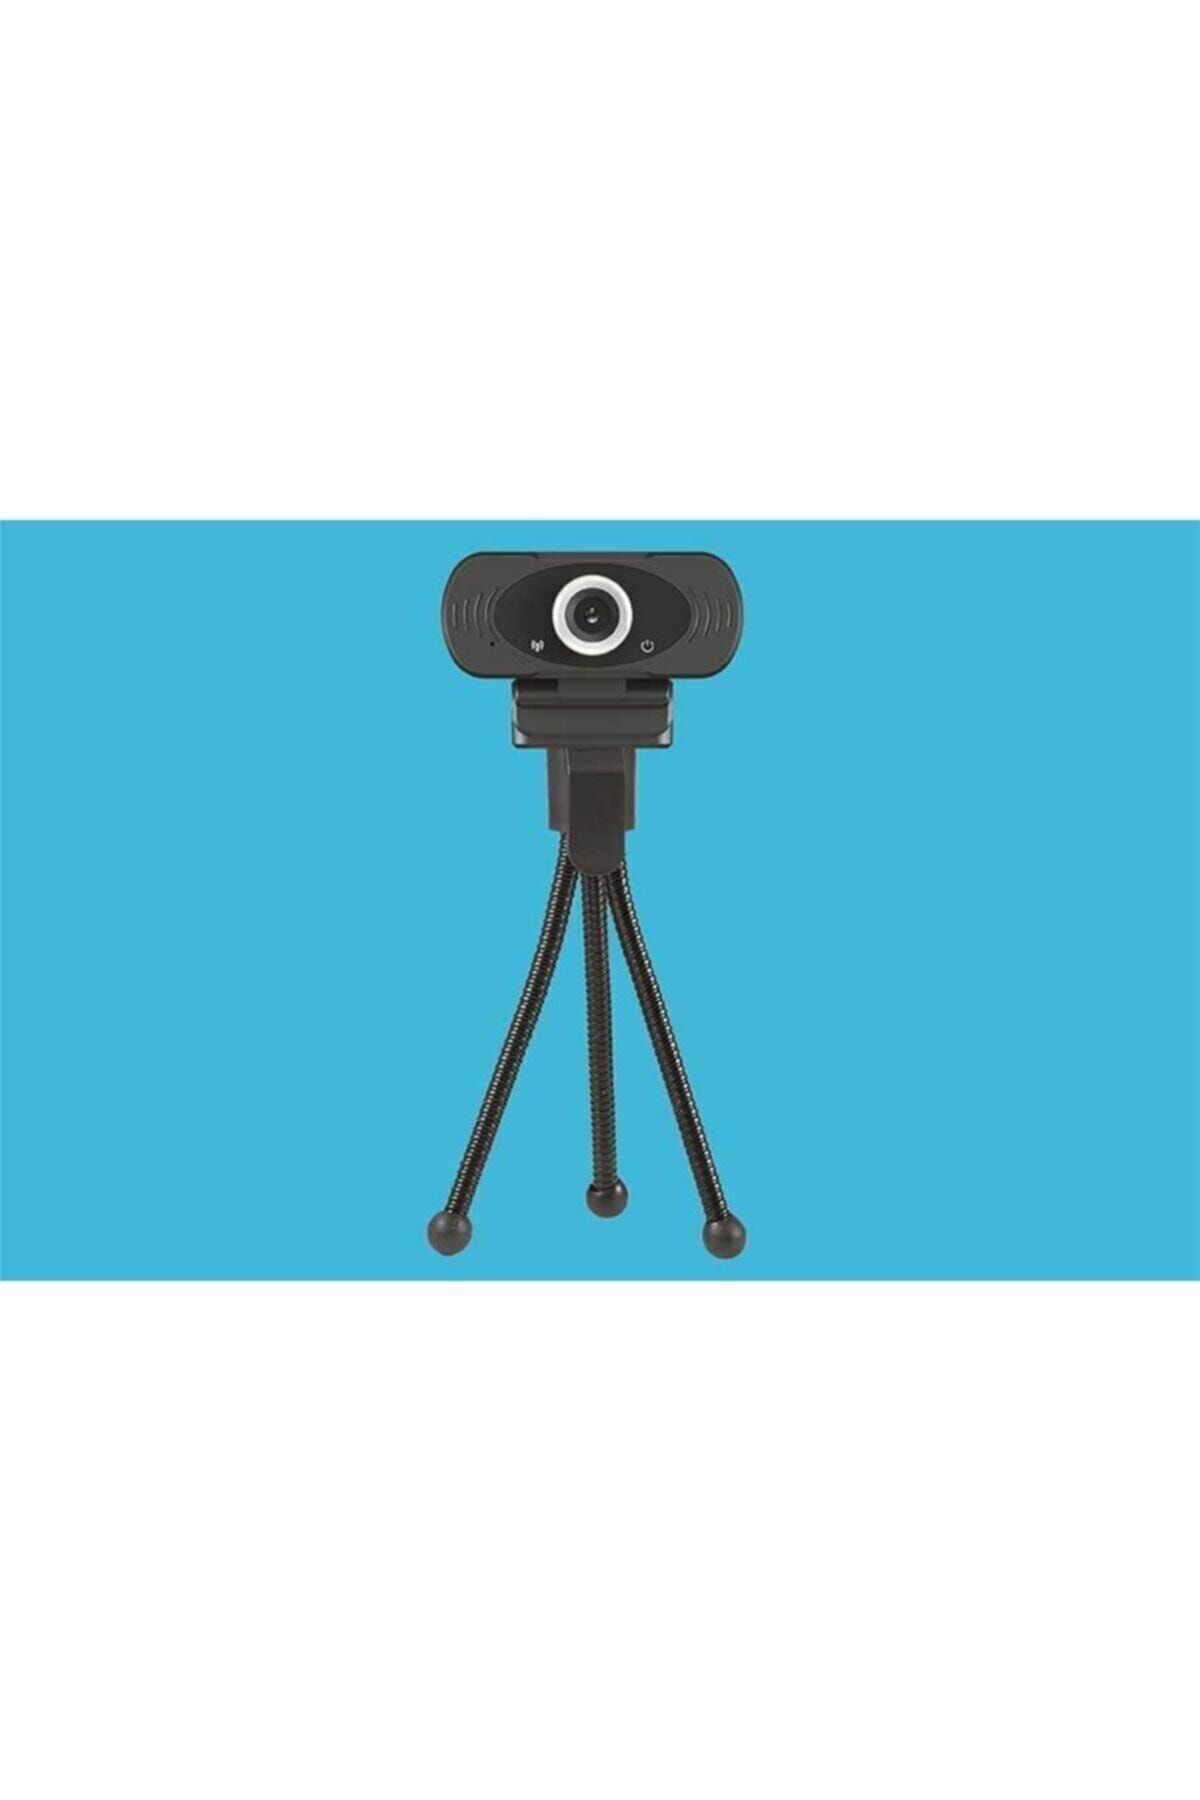 Everest Sc-hd03 1080p Full Hd Webcam Pc Kamera + Tripod